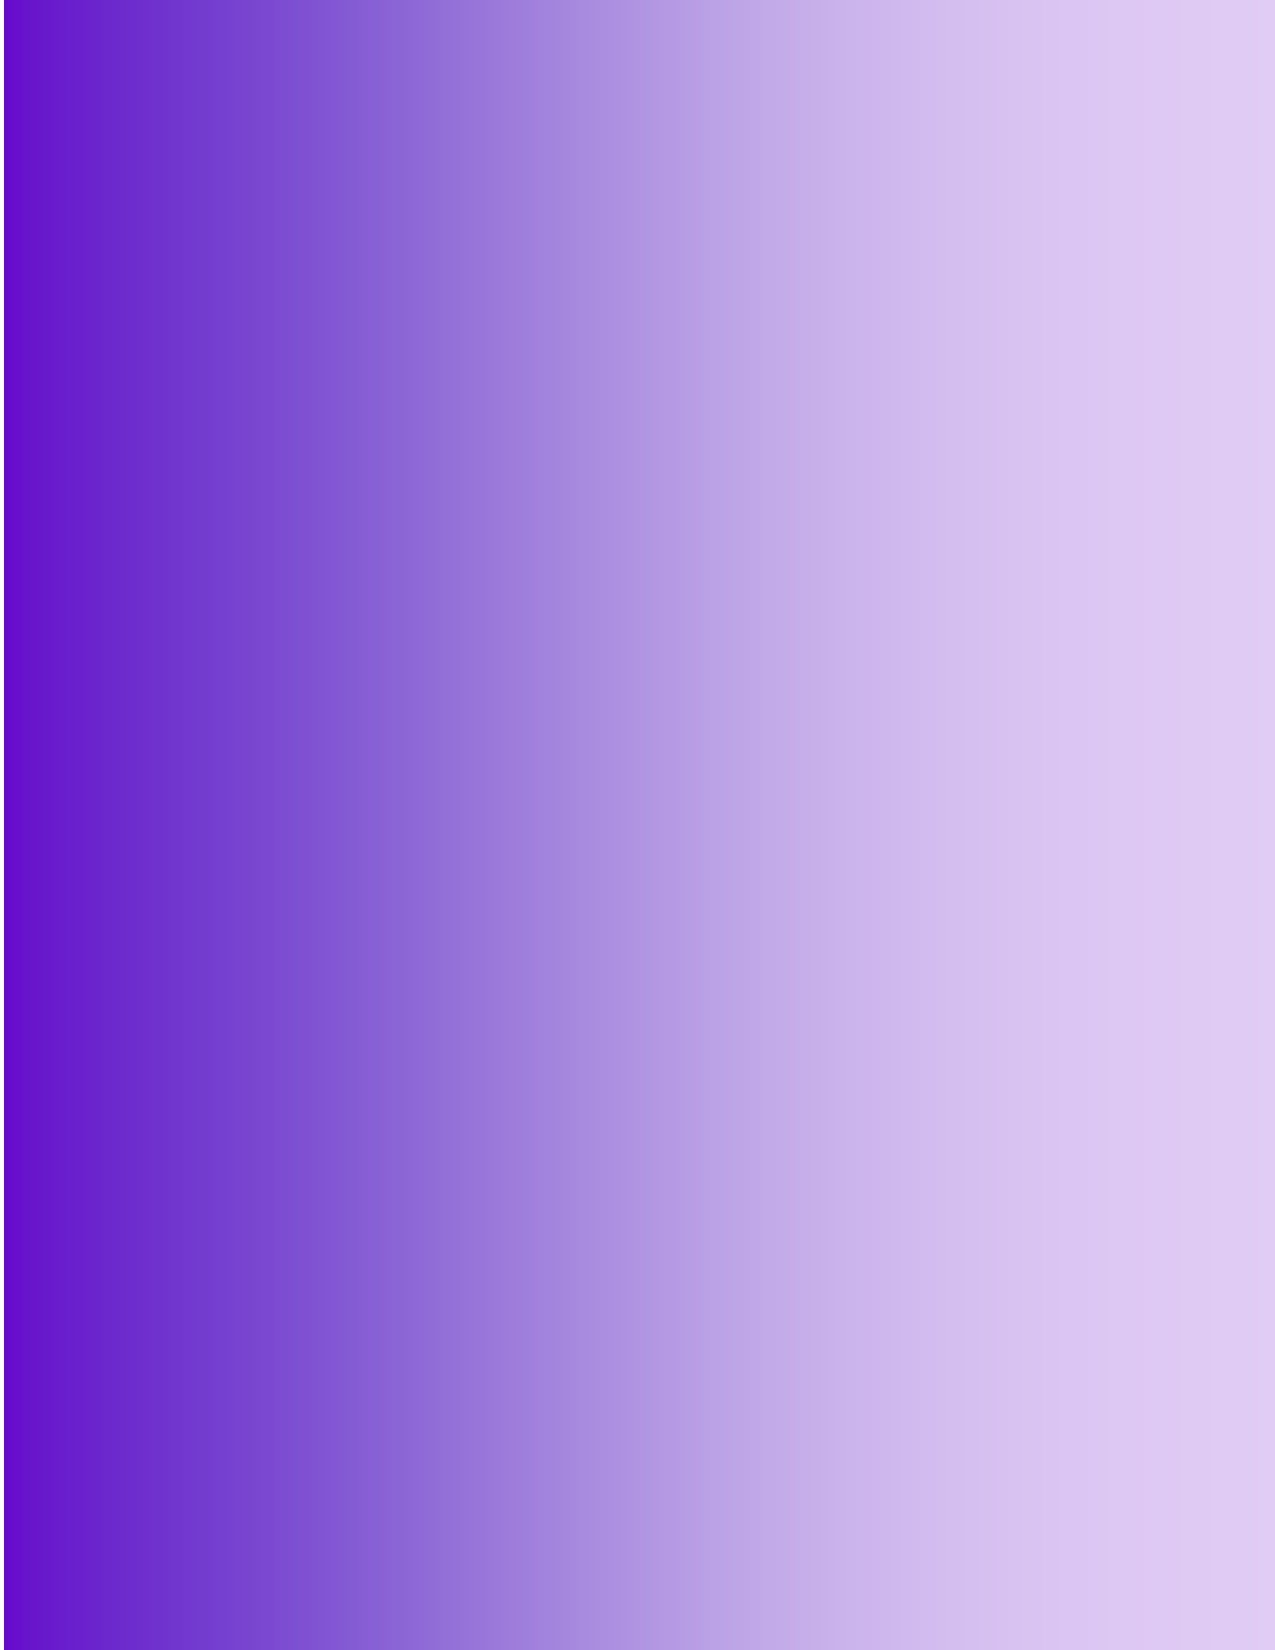 Organizational Chart - Purple Left.jpg